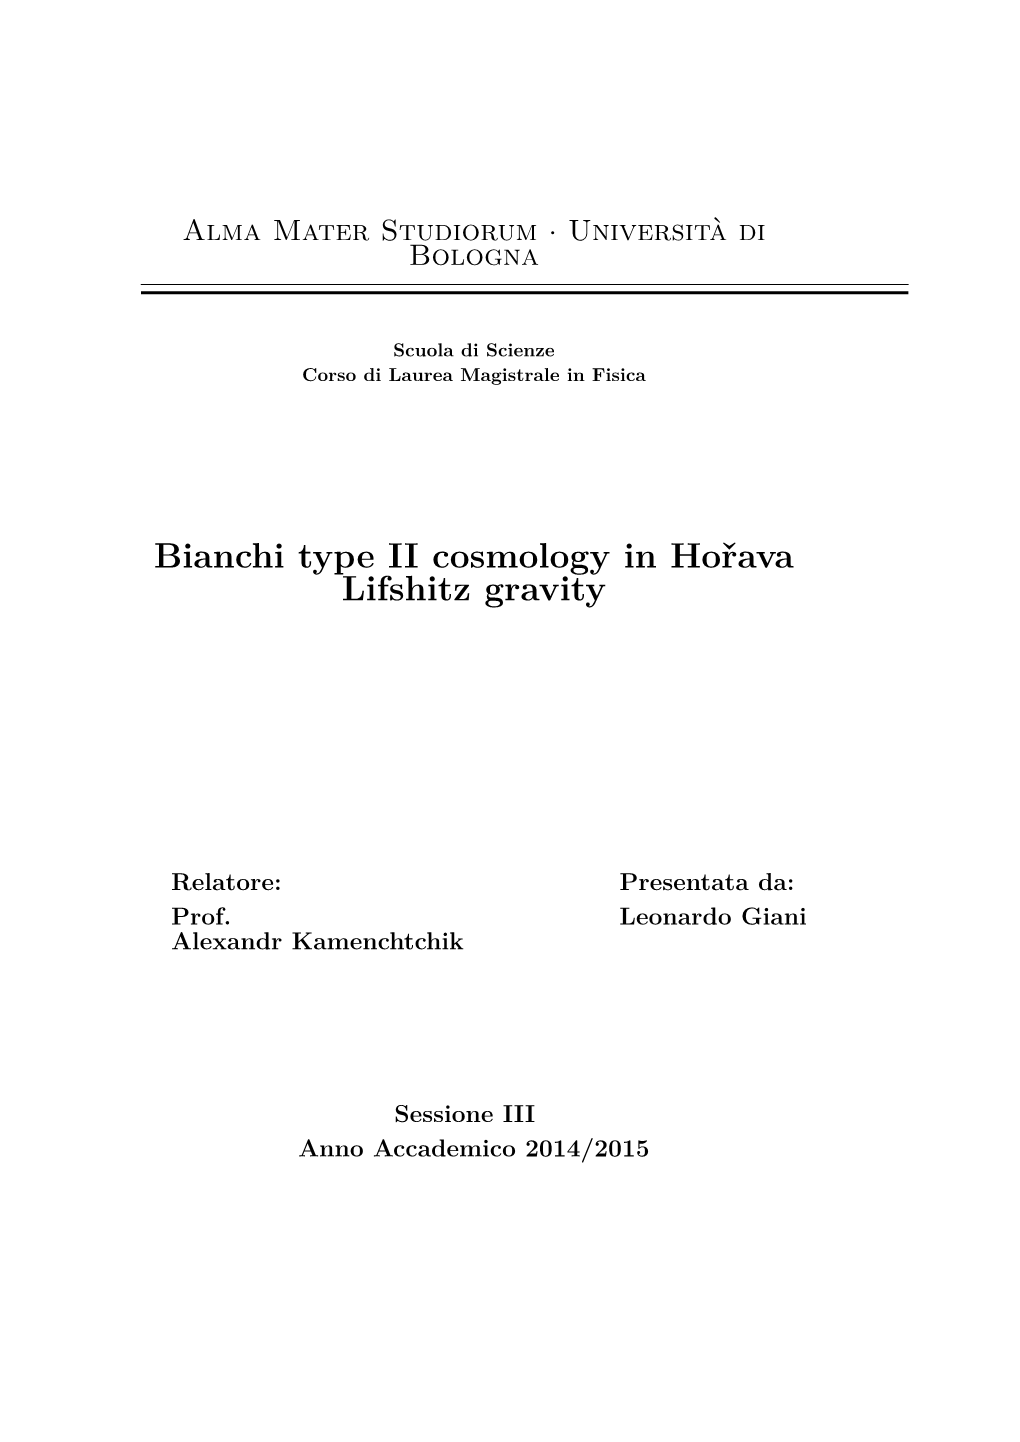 Bianchi Type II Cosmology in Hořava Lifshitz Gravity